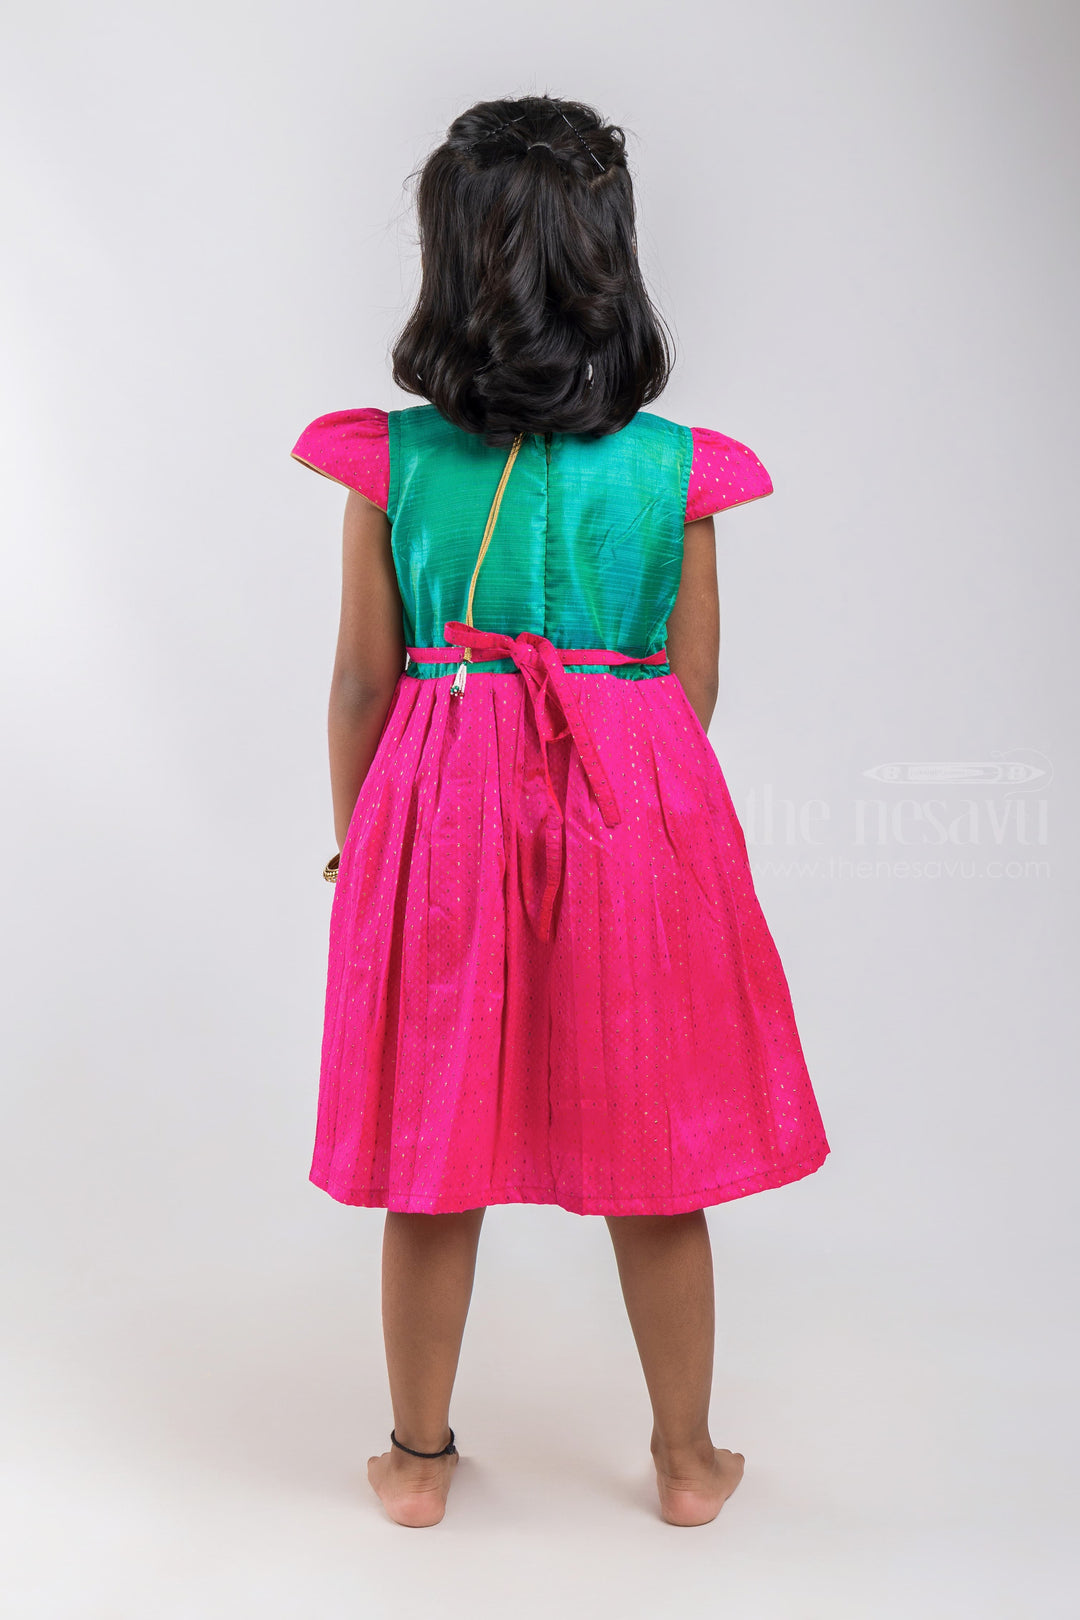 The Nesavu Silk Embroidered Frock Designer Knife Pleated Pink Silk Frock with Green Yoke for Girls psr silks Nesavu